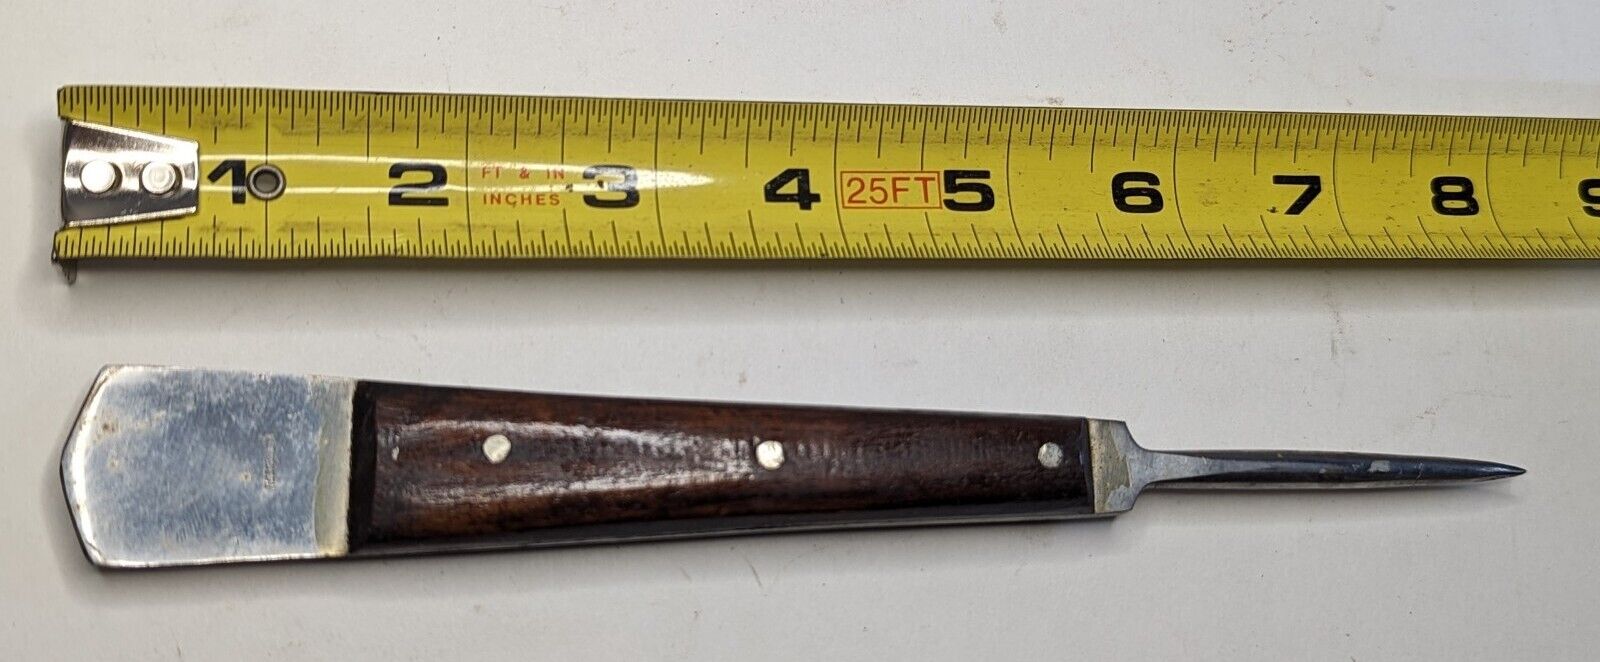 Vintage Tool BROOKSTONE STAINLESS PAKISTAN marking knife